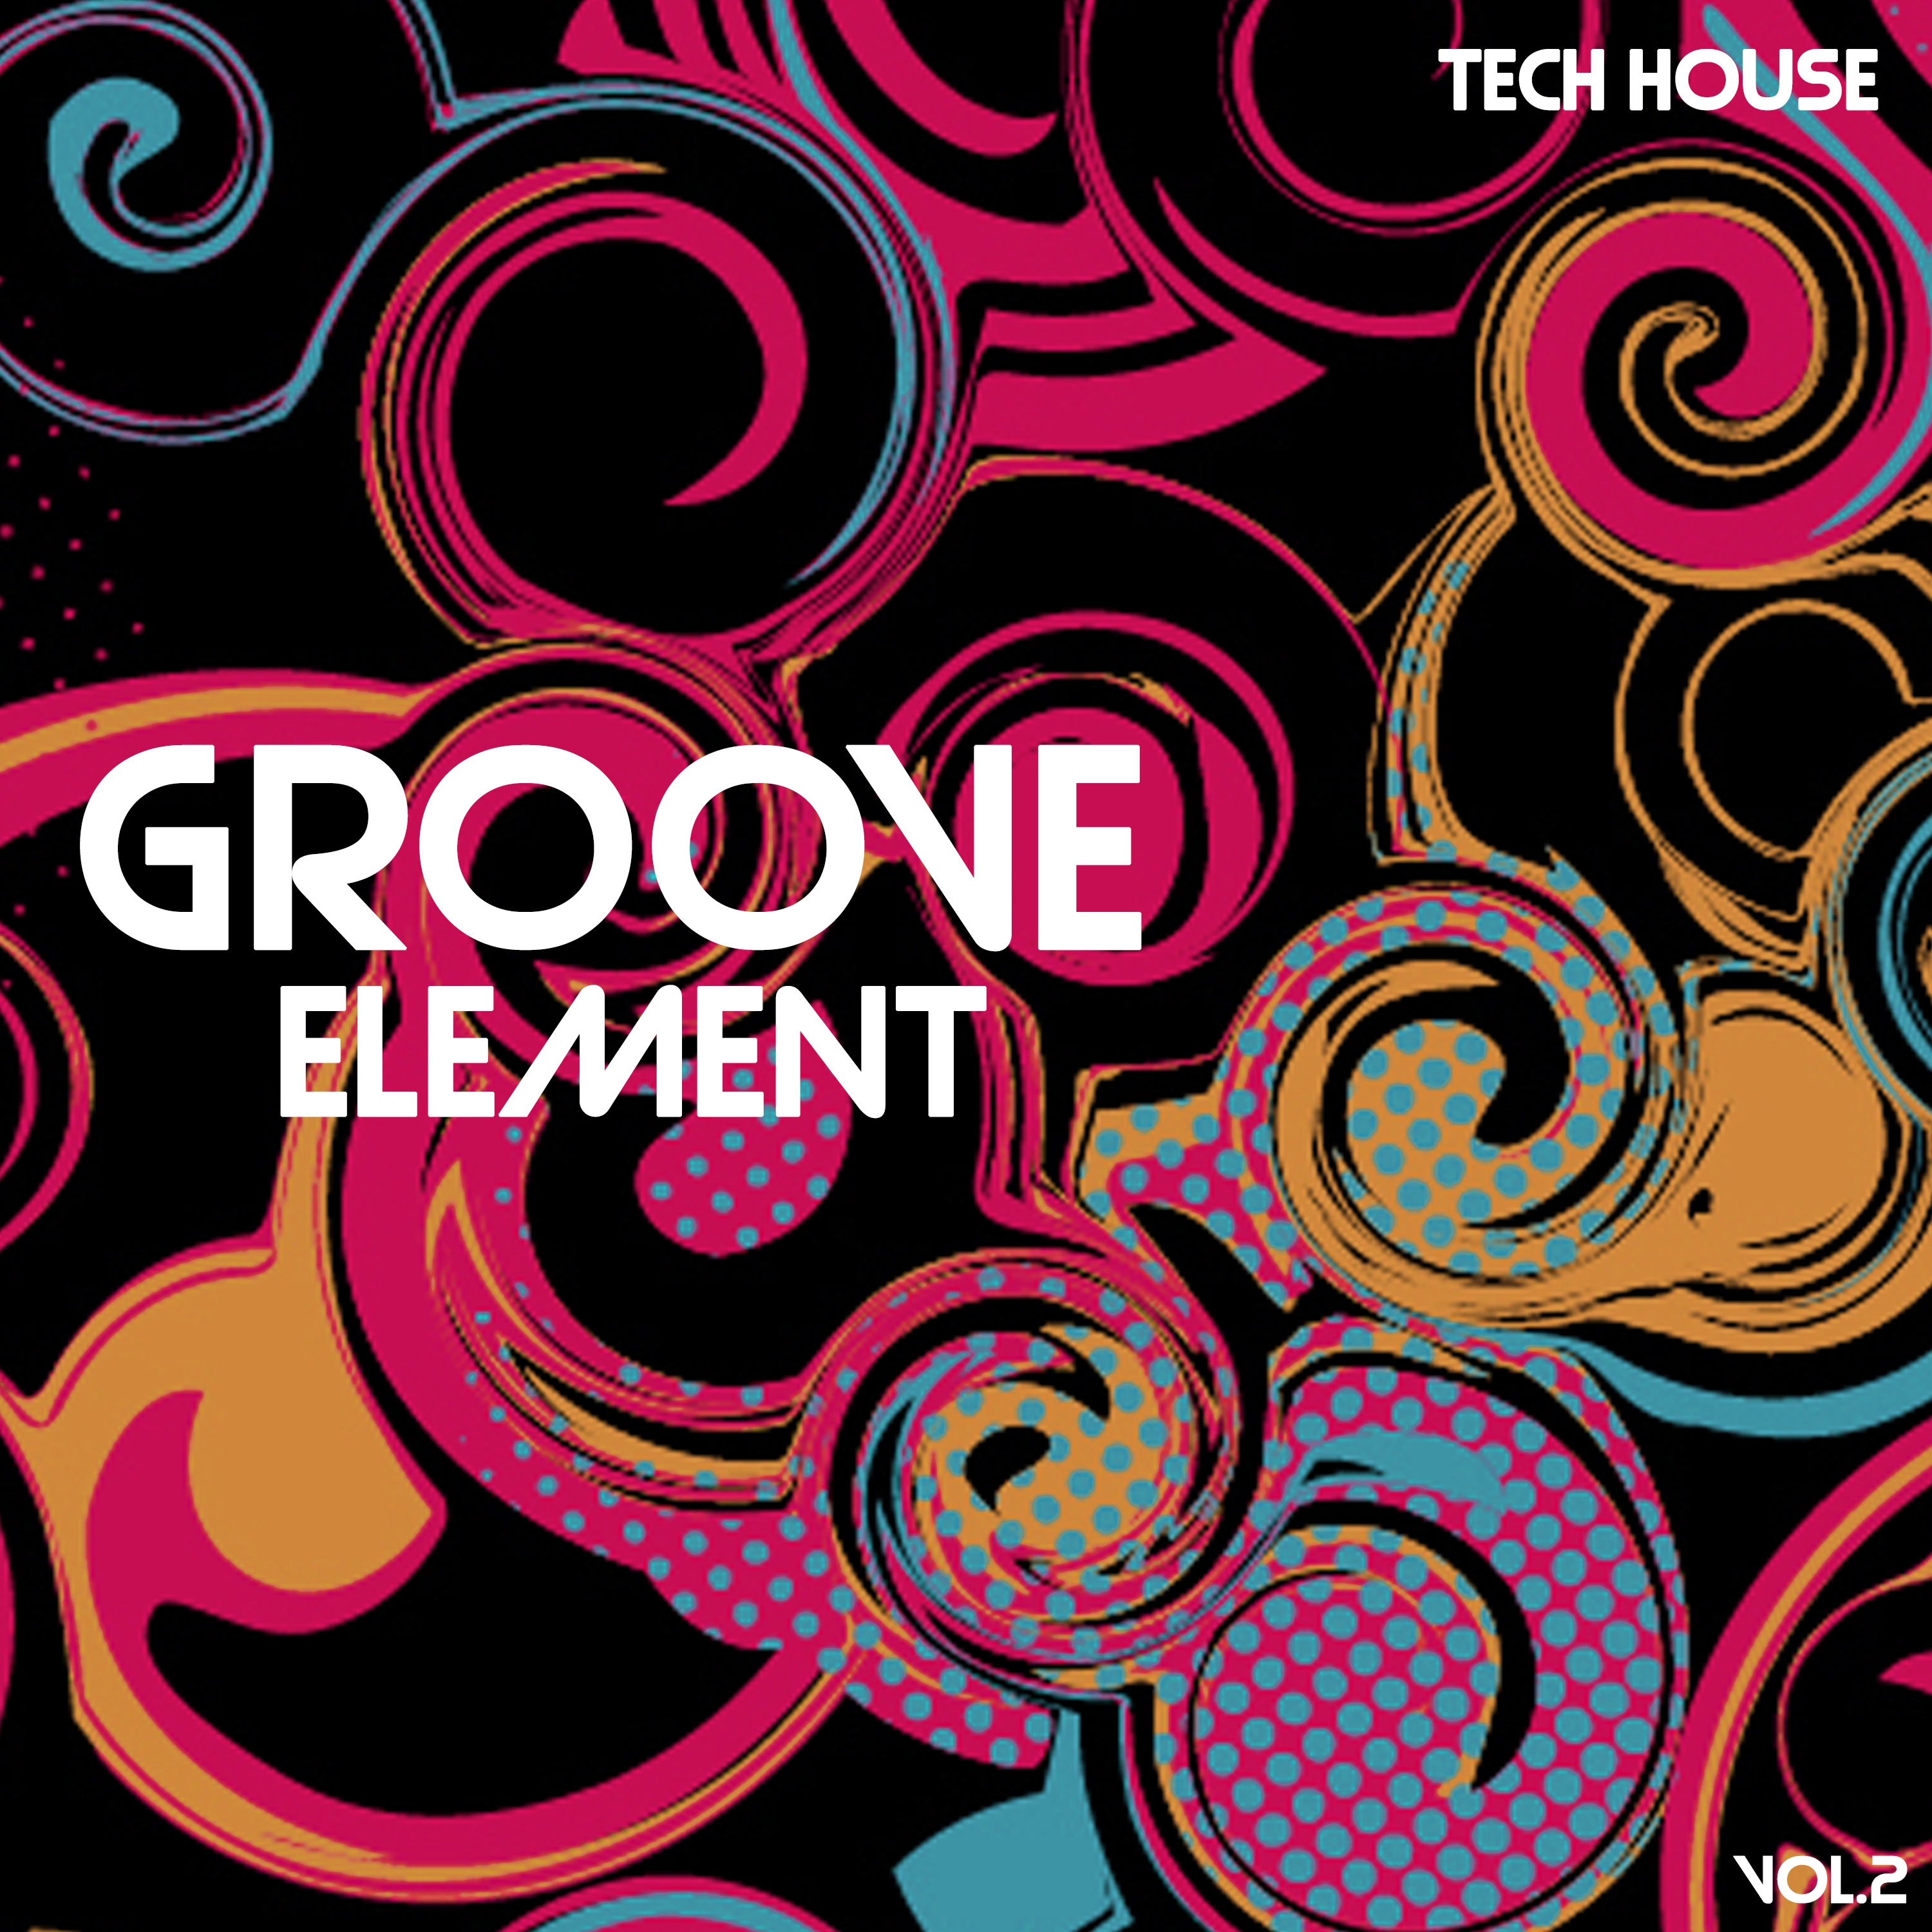 Groove Element Tech House, Vol. 2